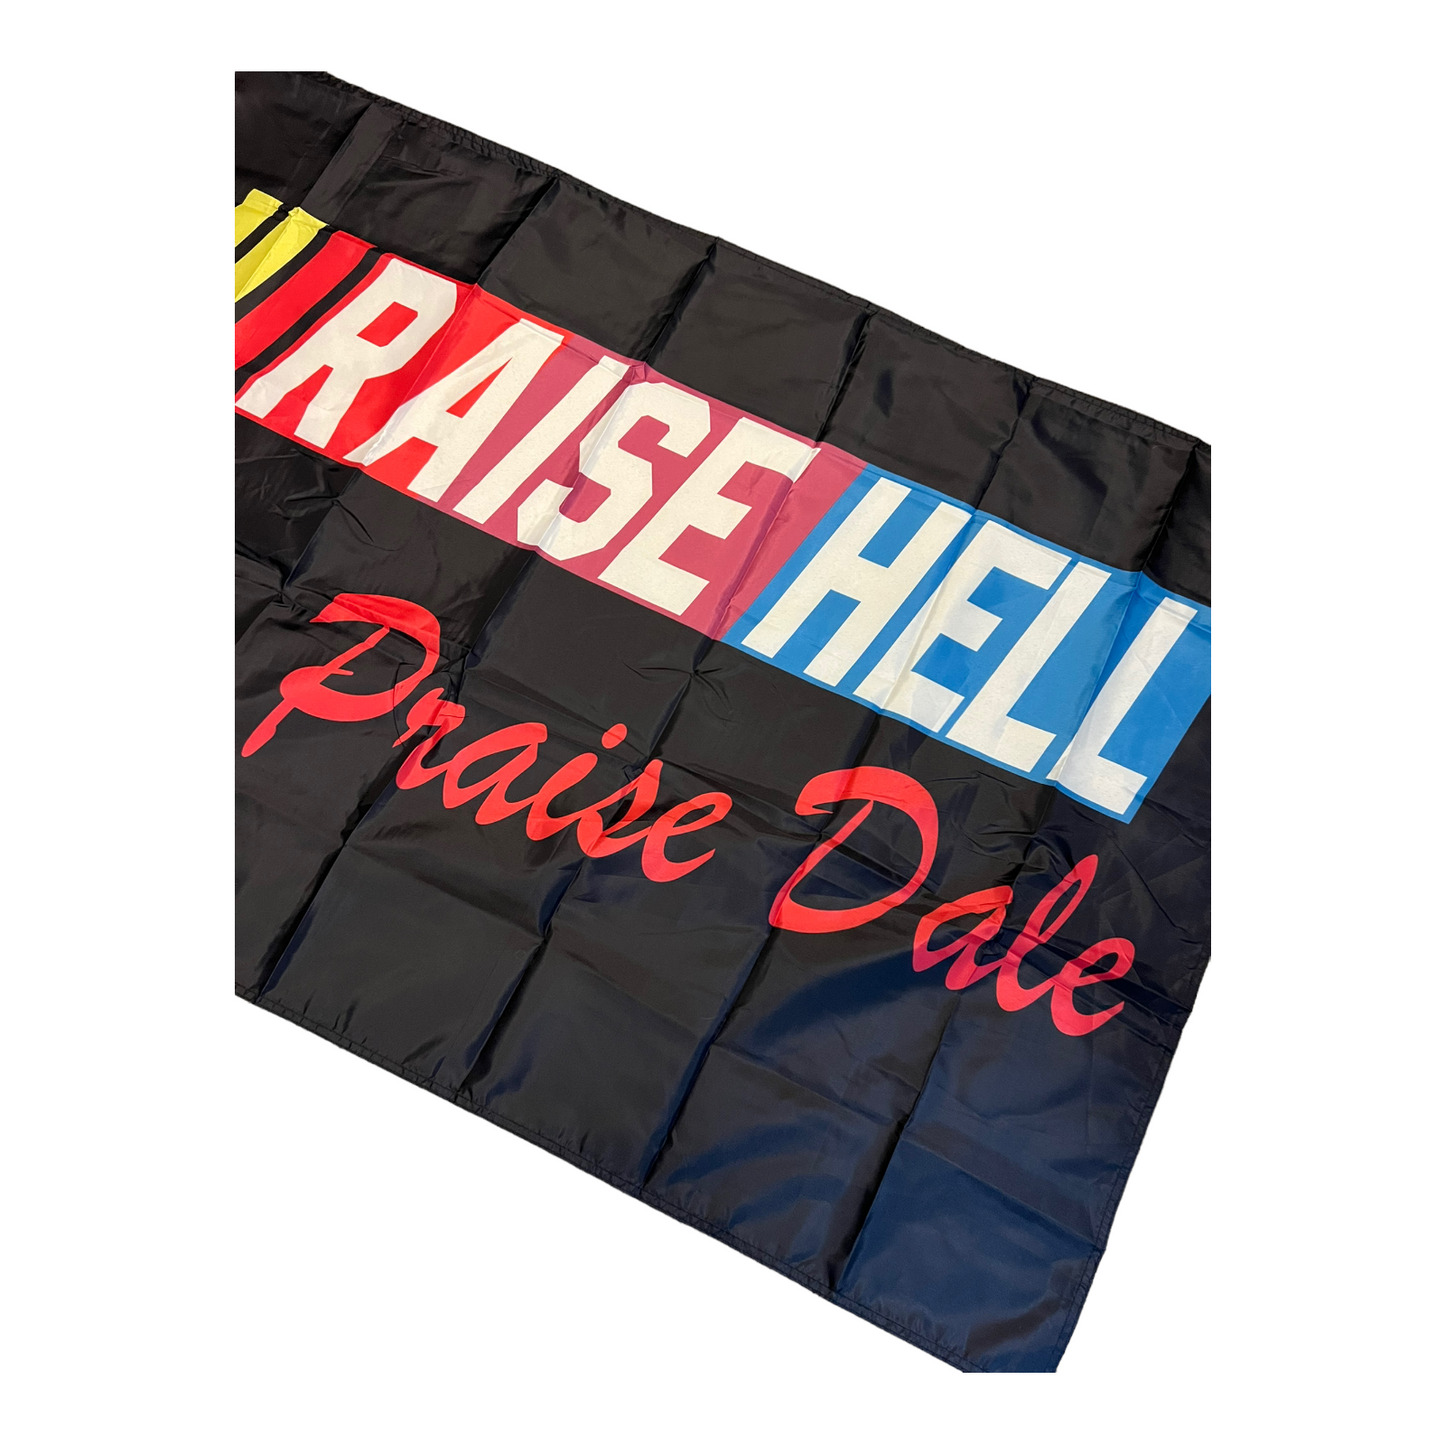 Raise Hell Praise Dale Flag 3x5 Wall Decor Banner Nascar Dale Earnhardt Flag